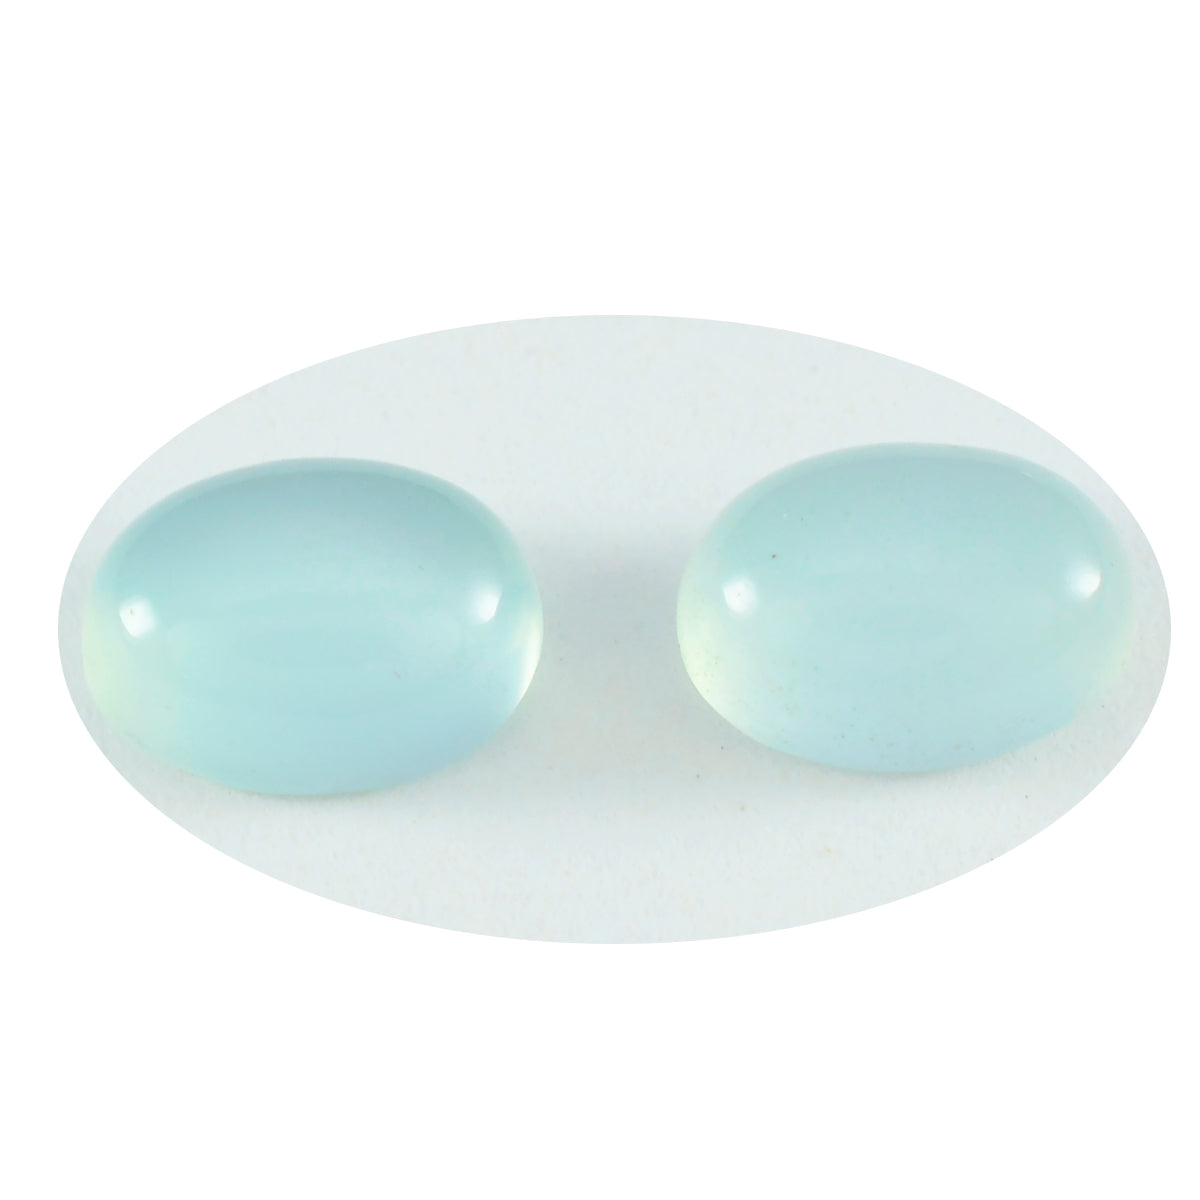 Riyogems 1 Stück Aqua-Chalcedon-Cabochon, 6 x 8 mm, ovale Form, attraktive Qualitätsedelsteine